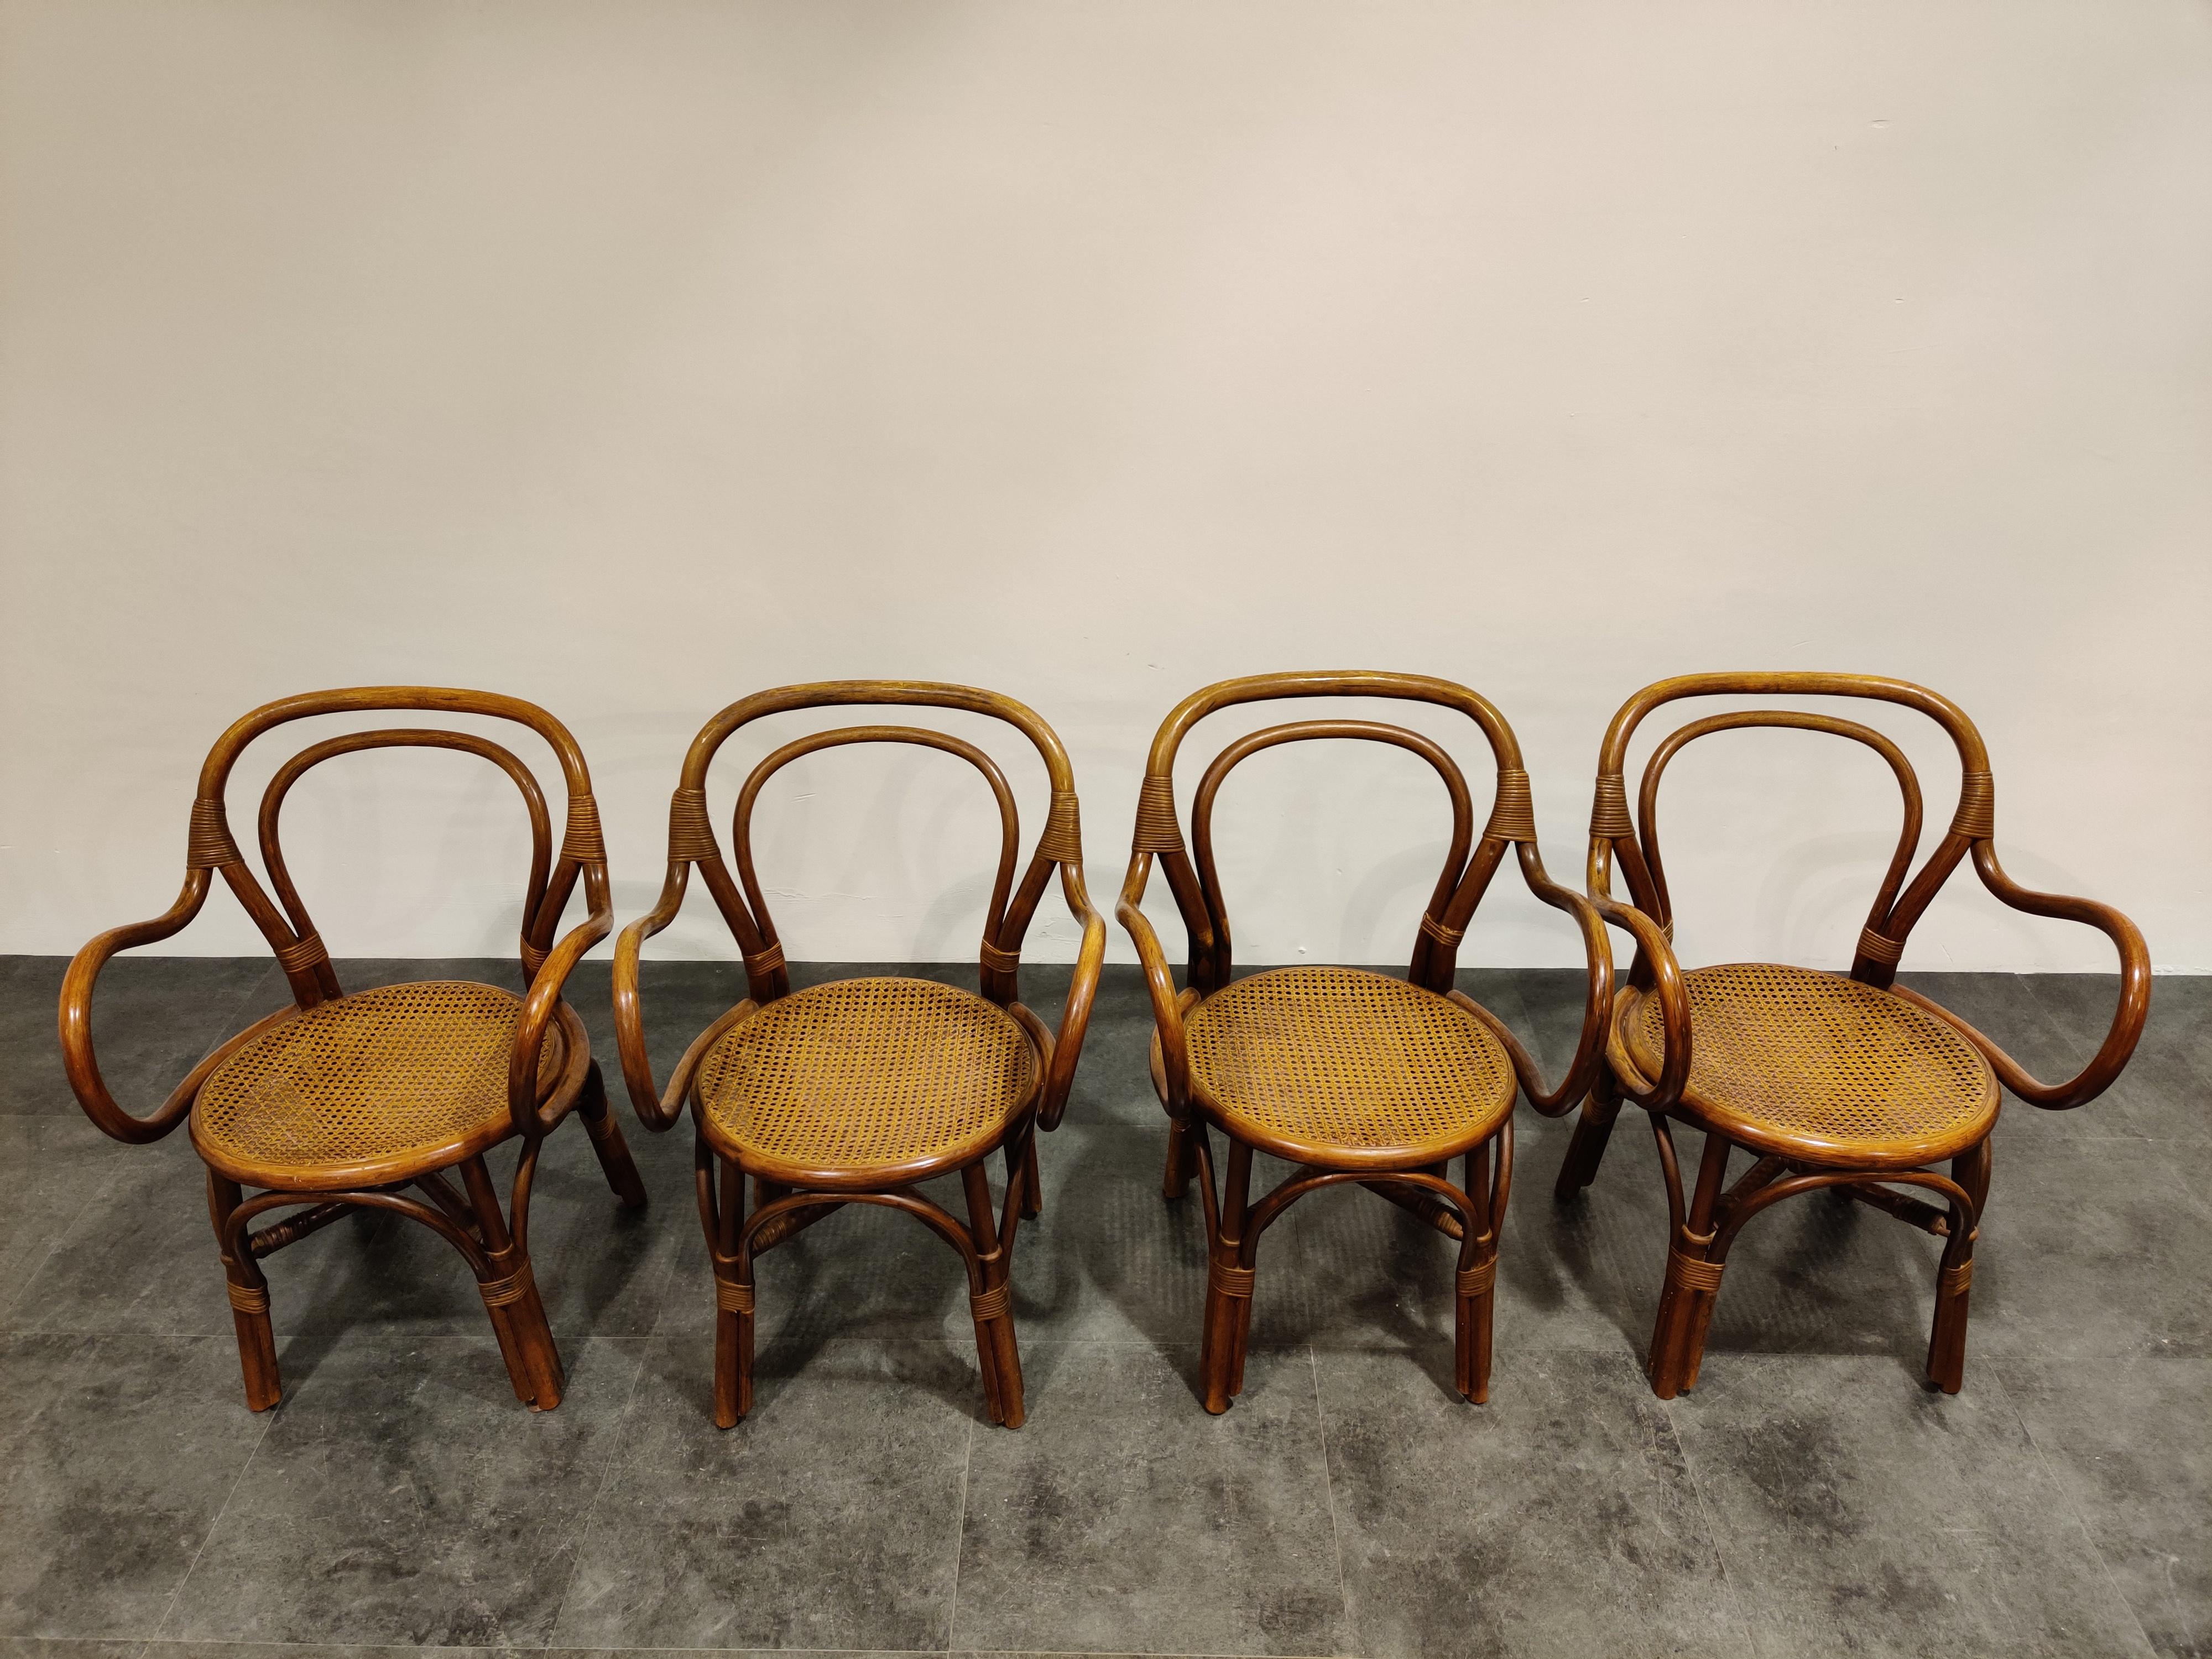 bentwood rattan chairs -china -b2b -forum -blog -wikipedia -.cn -.gov -alibaba